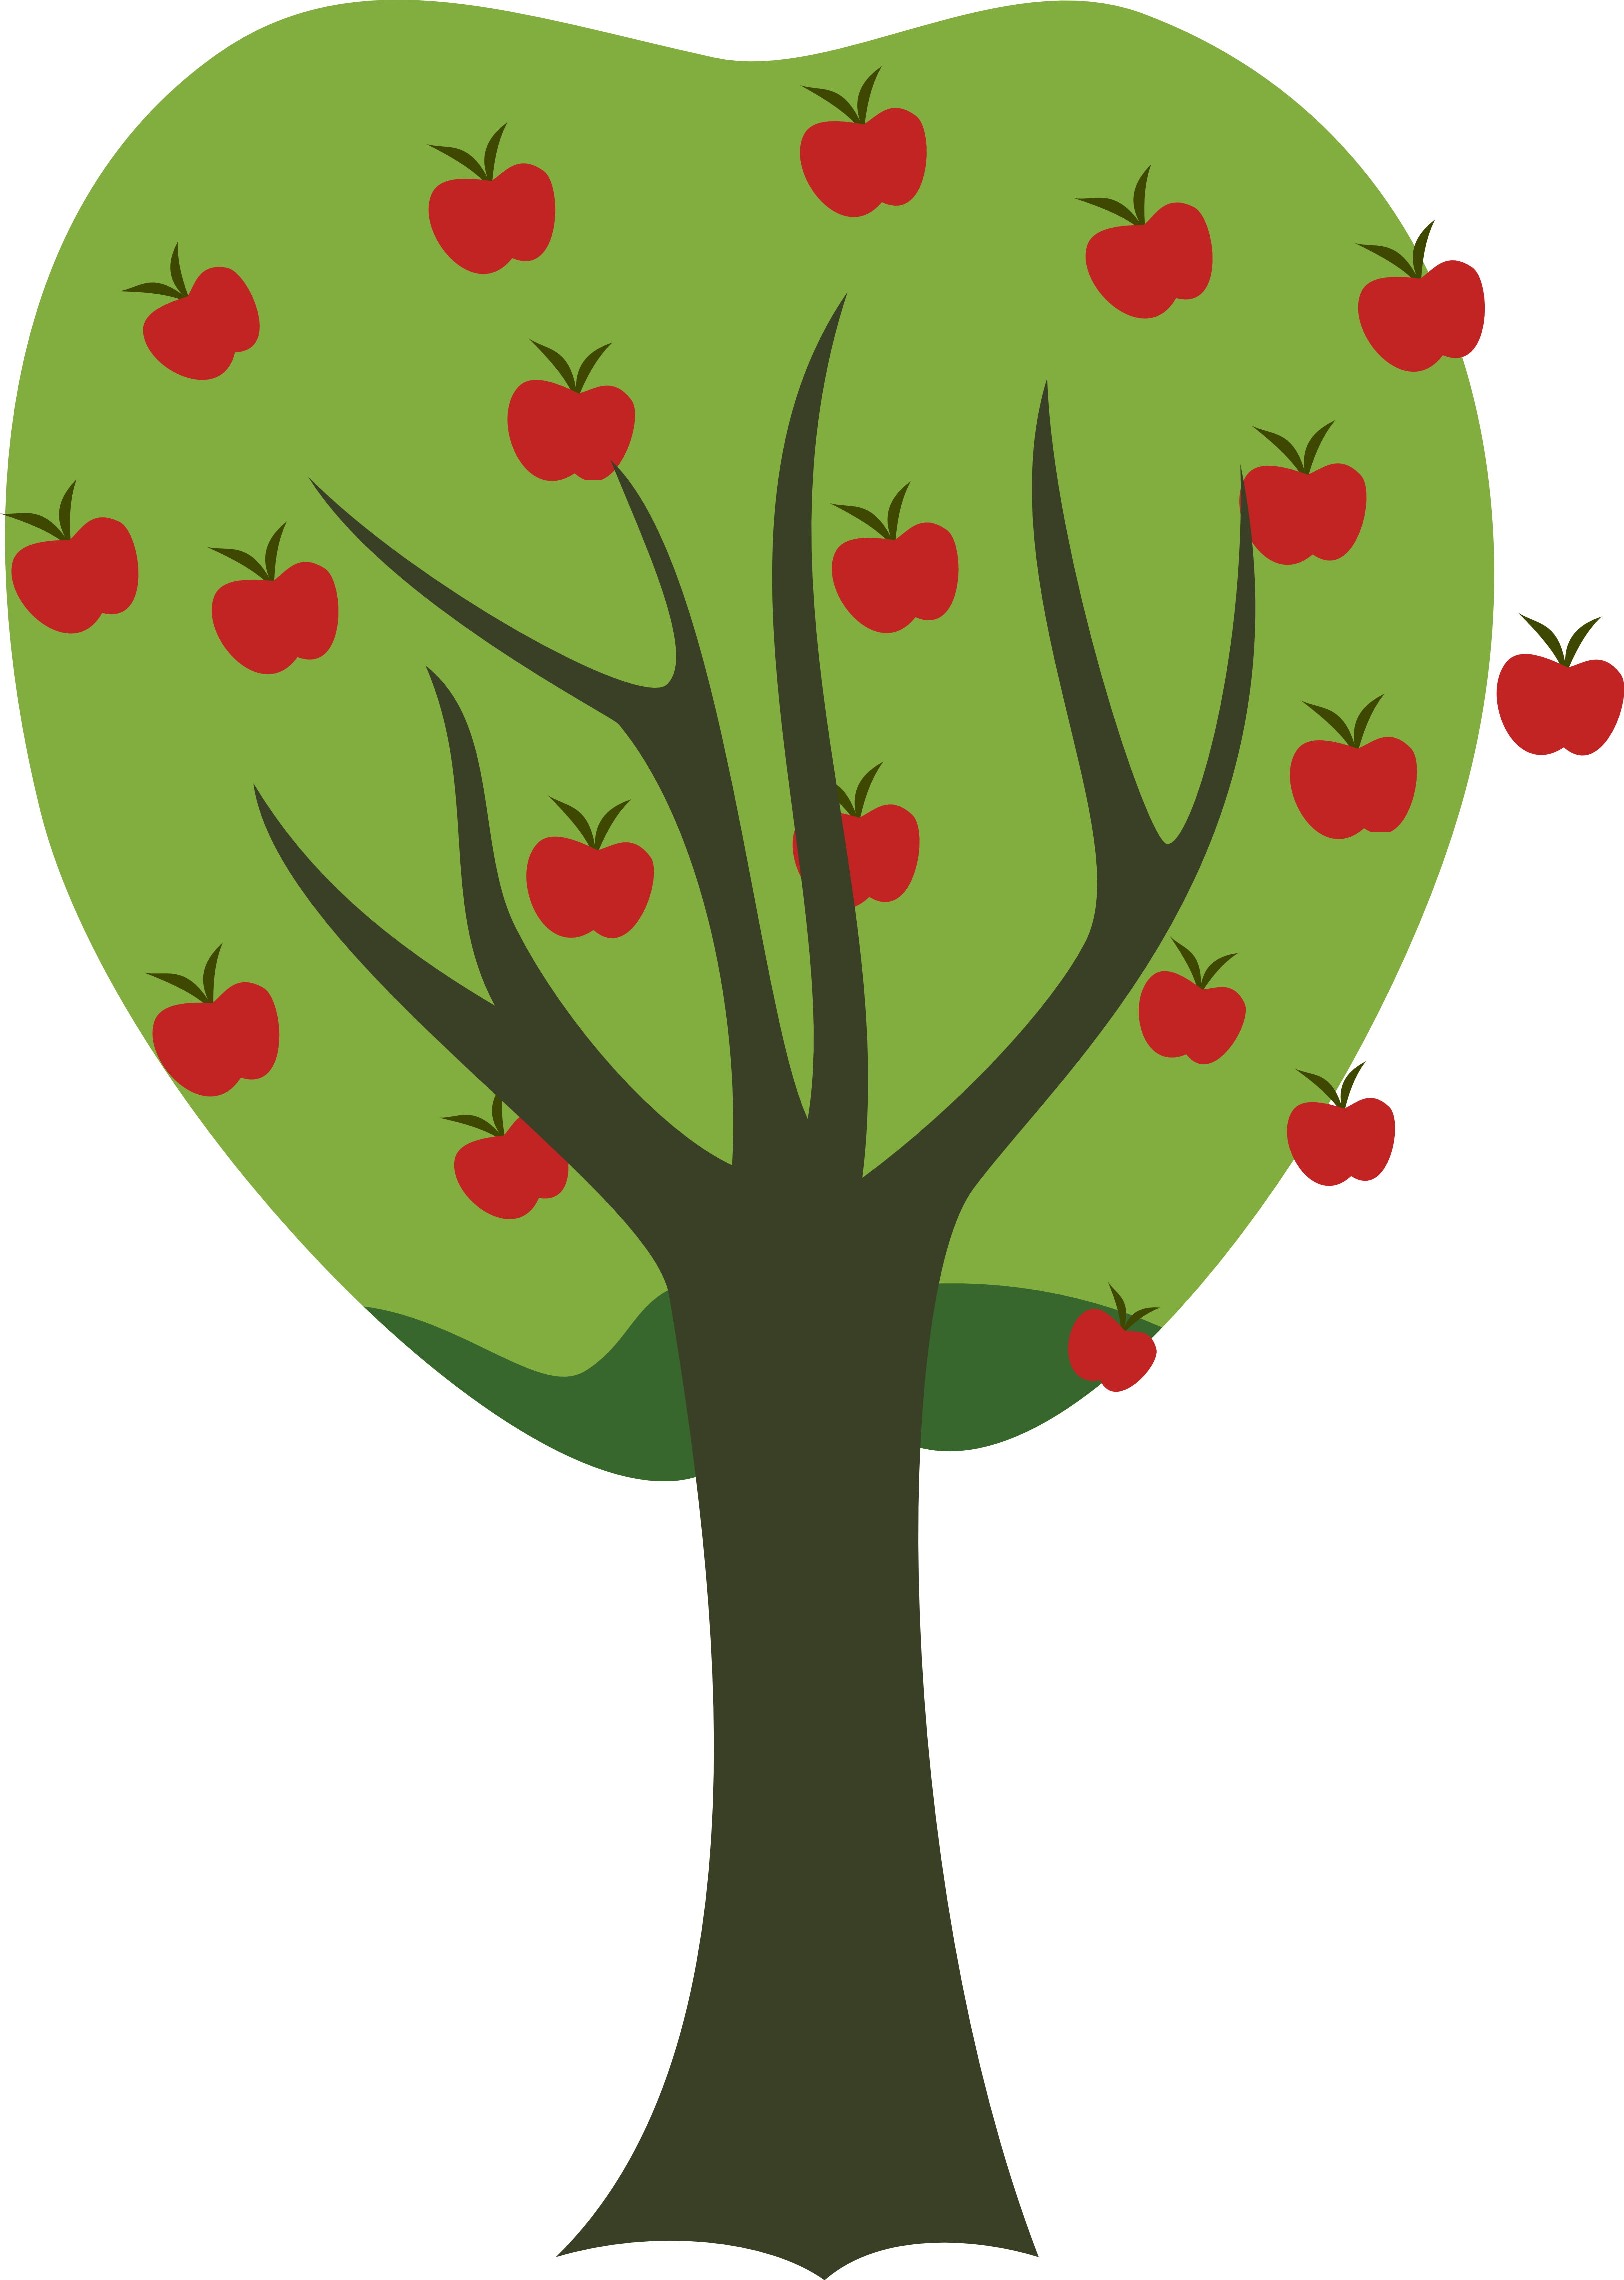 apple tree template for preschool - Clip Art Library